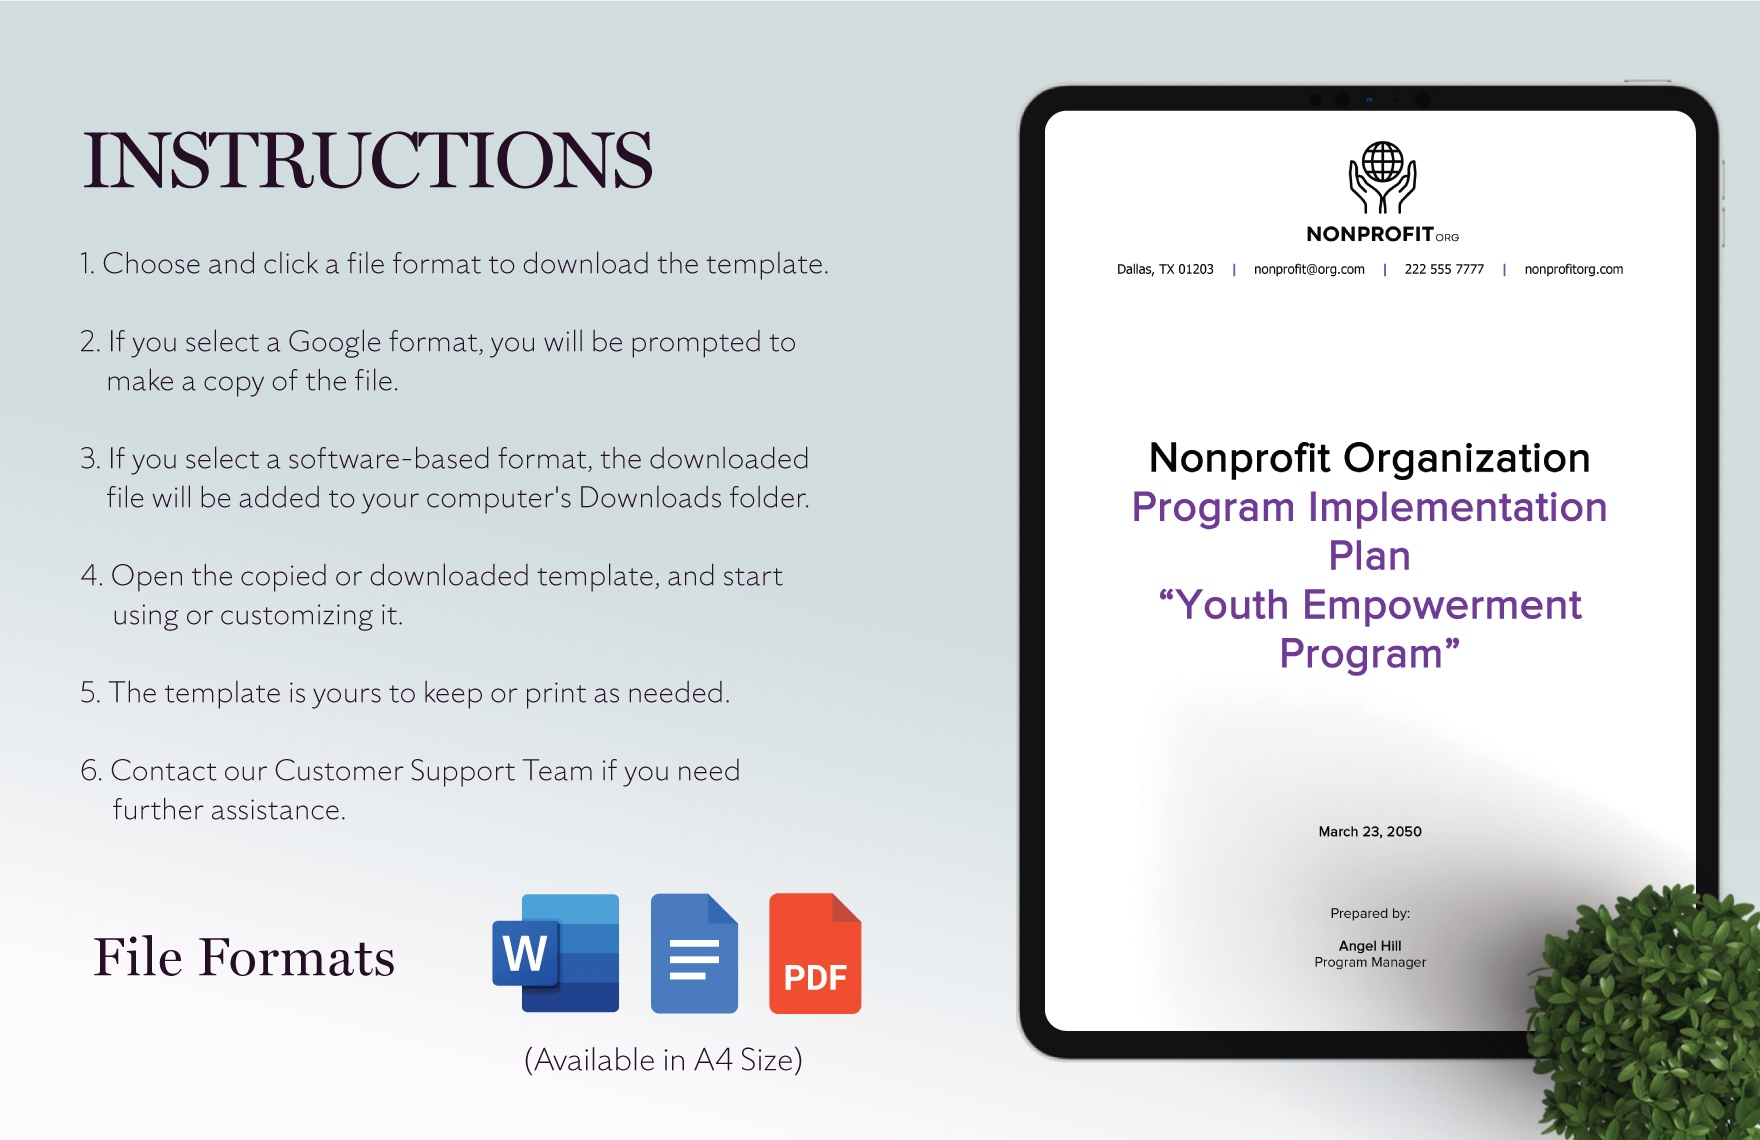 Nonprofit Organization Program Implementation Plan Template